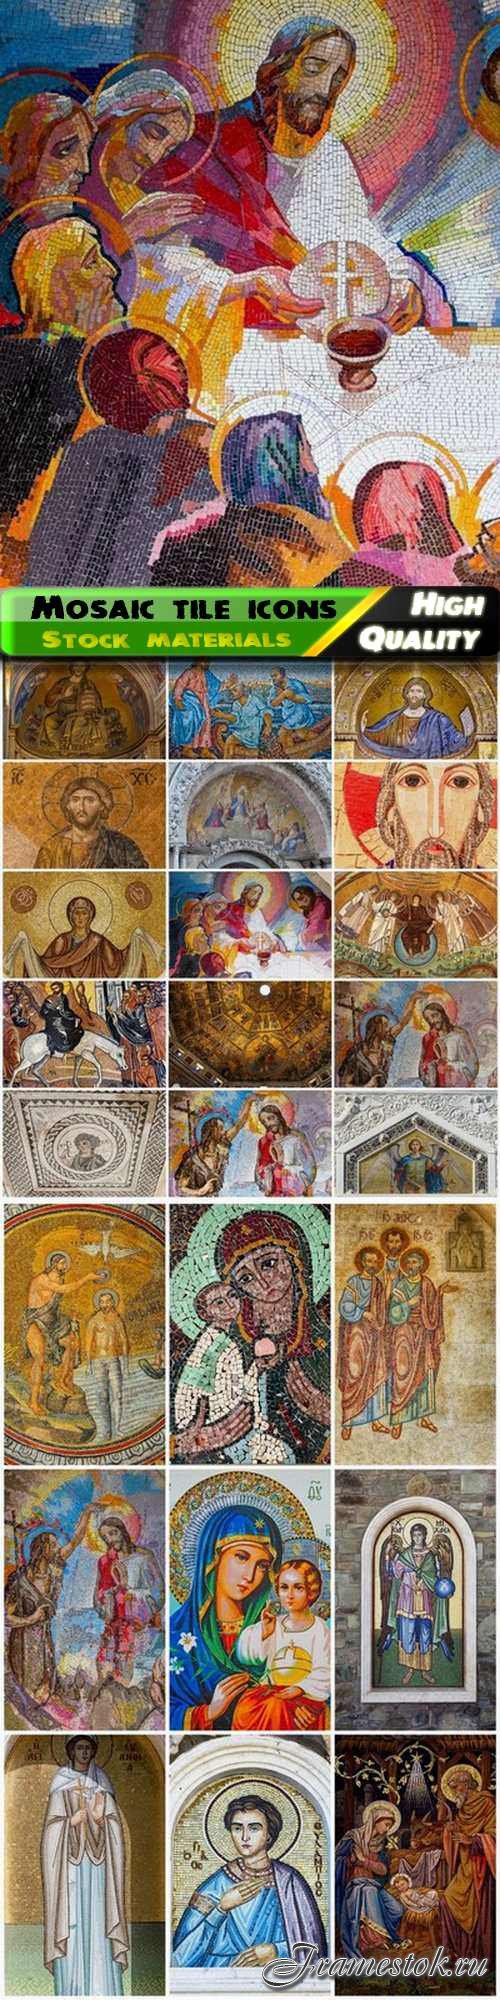 Biblical mosaic tile icons of saints and Jesus Christ 25 HQ Jpg